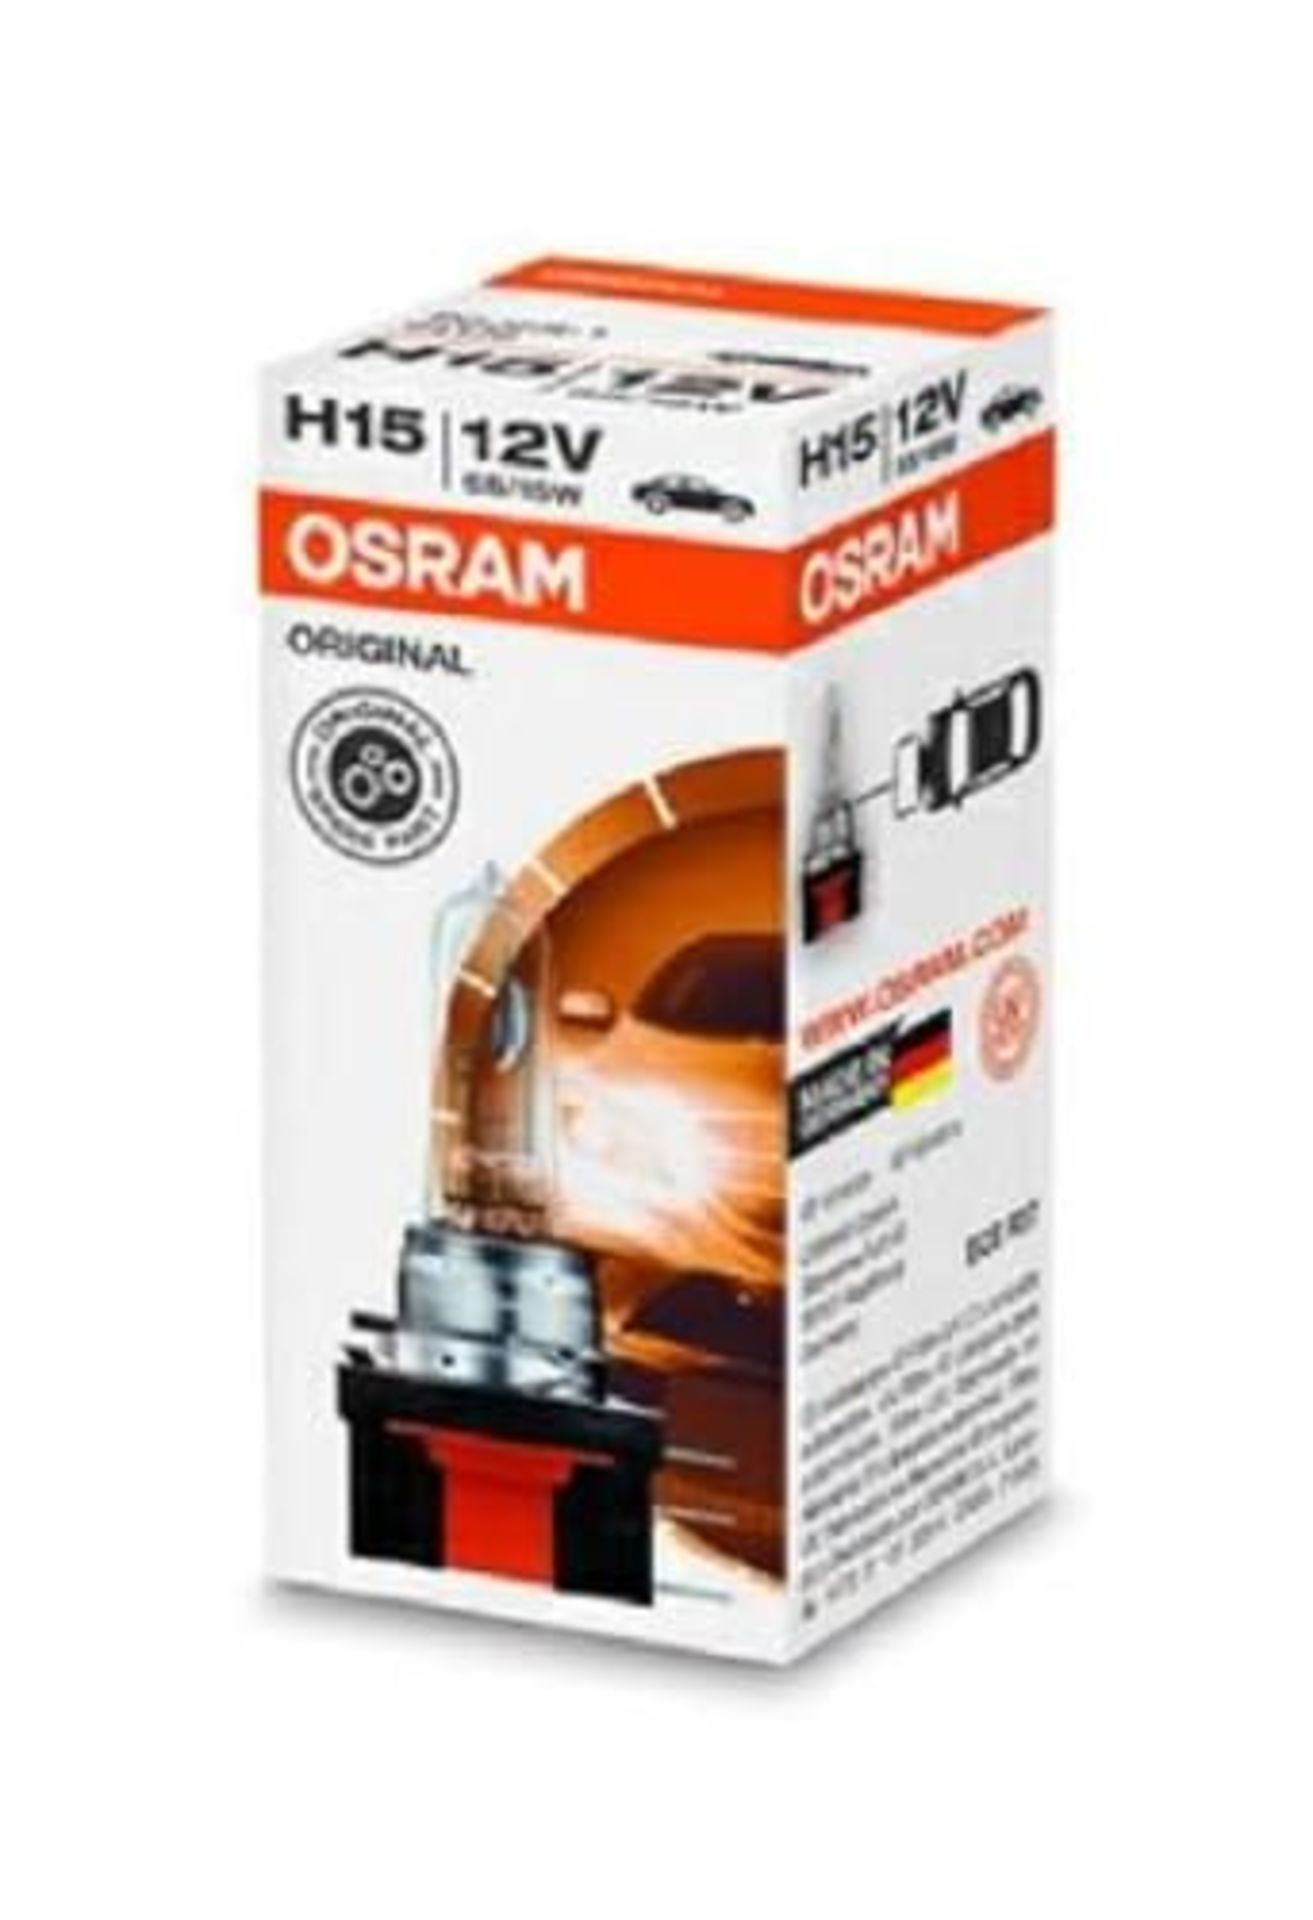 OSRAM Original 12V H15 halogen headlamp bulb 64176 1 piece in box